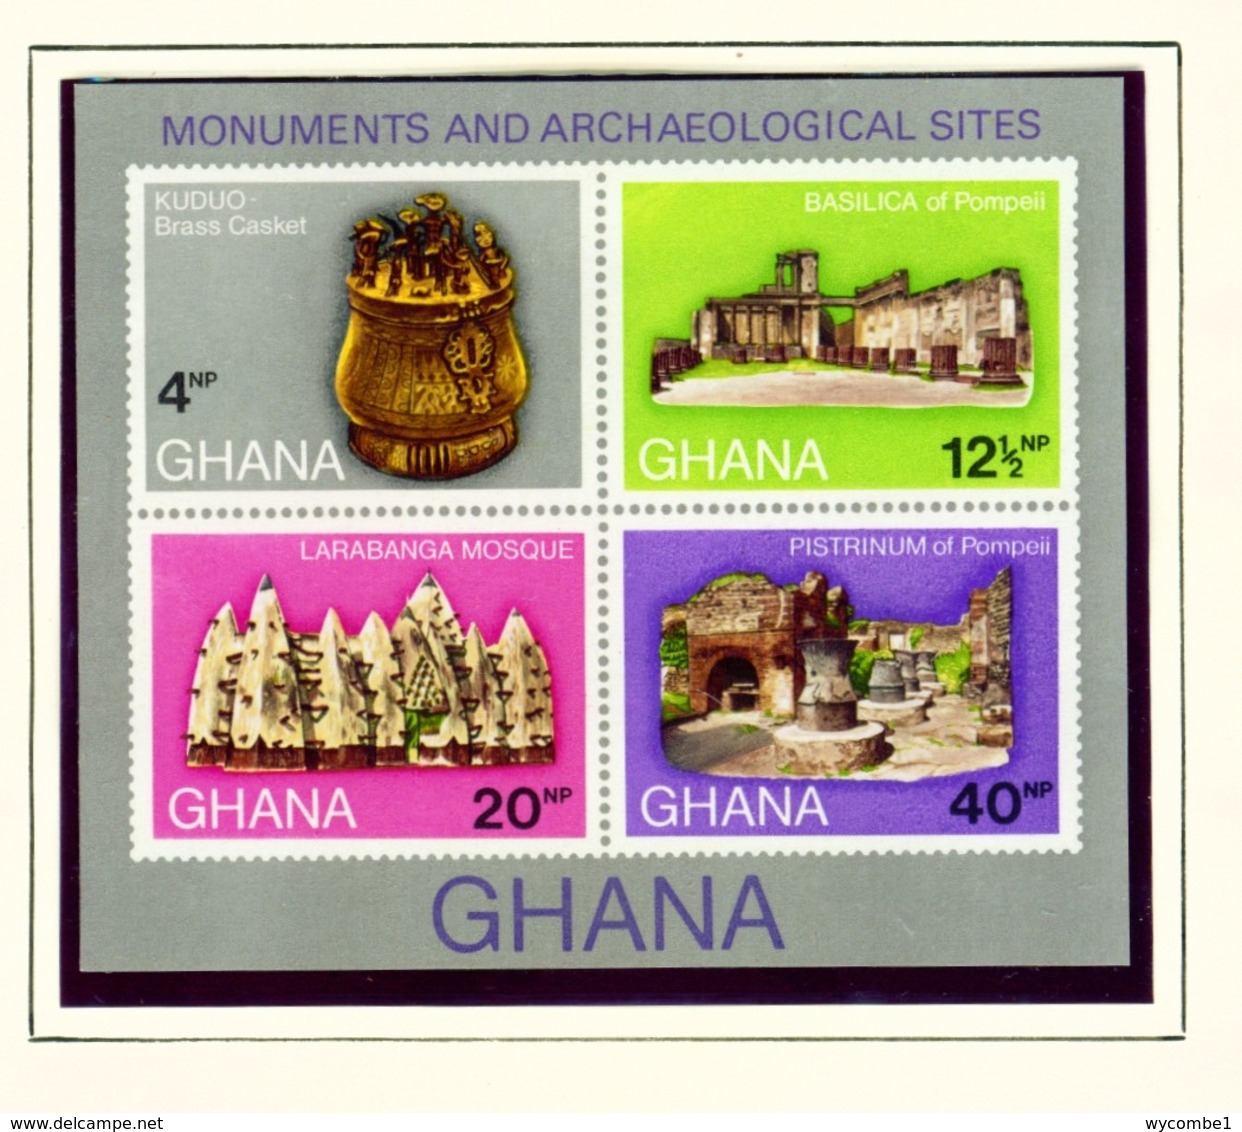 GHANA  -  1970 Archaeology Miniature Sheet Unmounted/Never Hinged Mint - Ghana (1957-...)